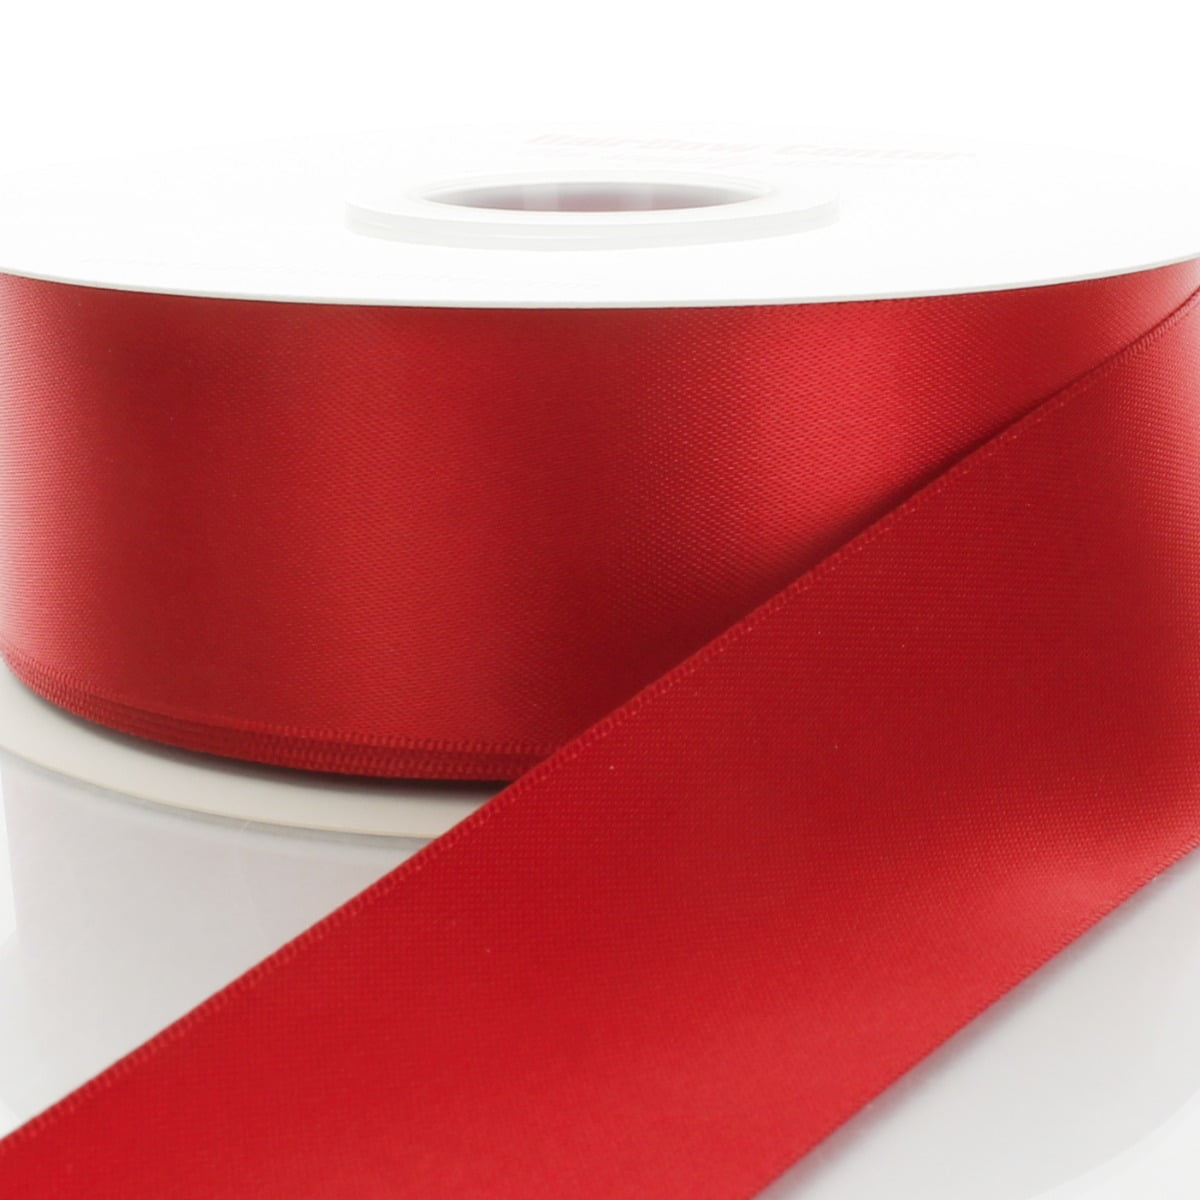  Solid Color Satin Ribbon 1/4,25yds (Dark red)